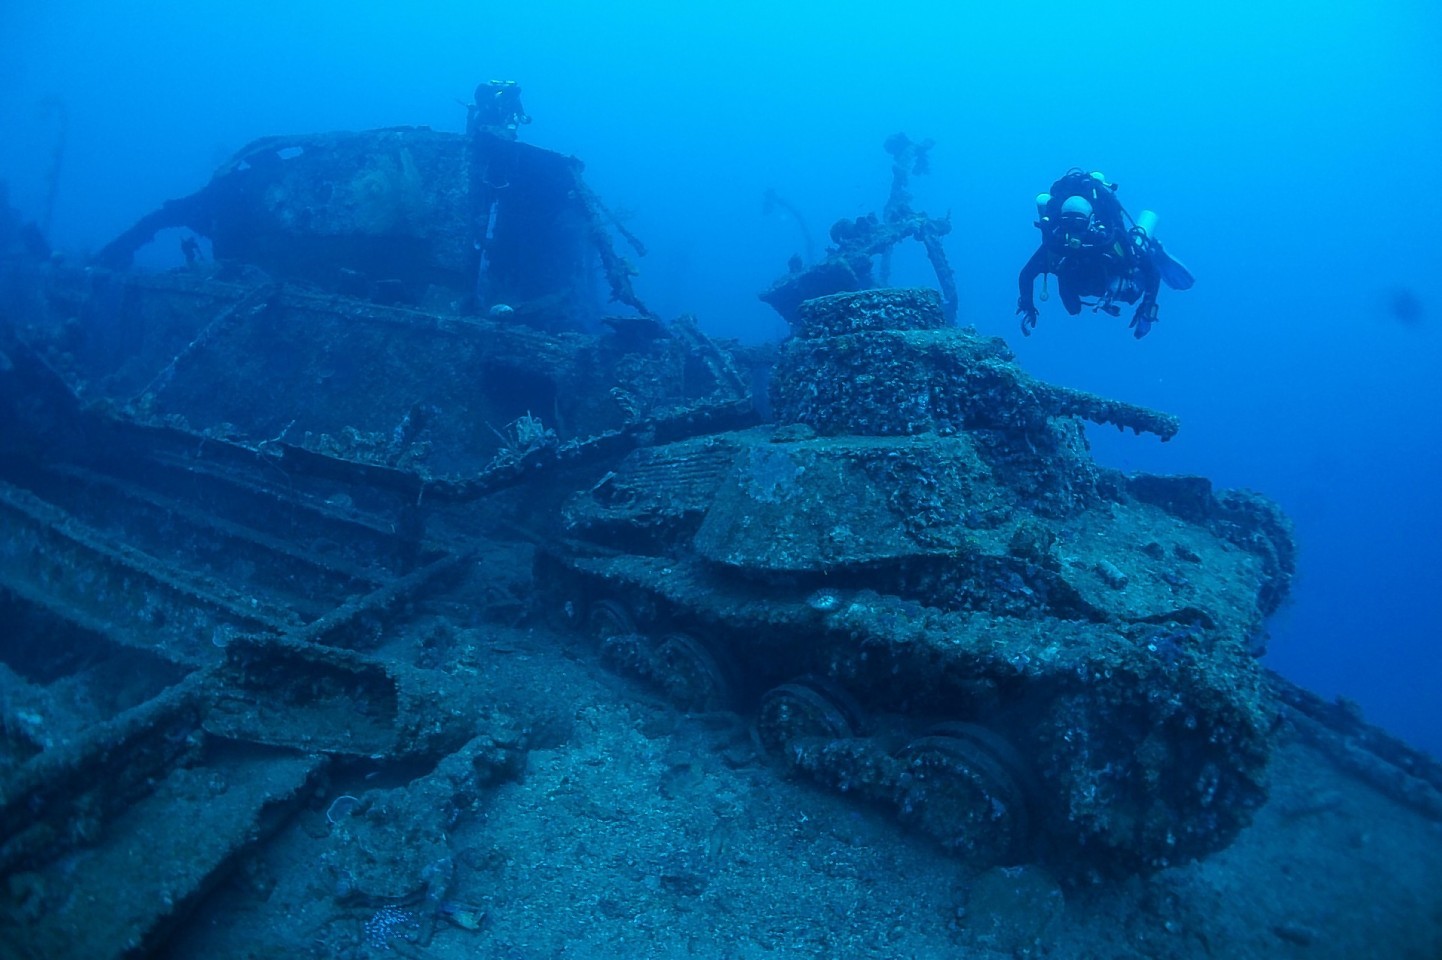 The divers survey the Japanese shipwrecks